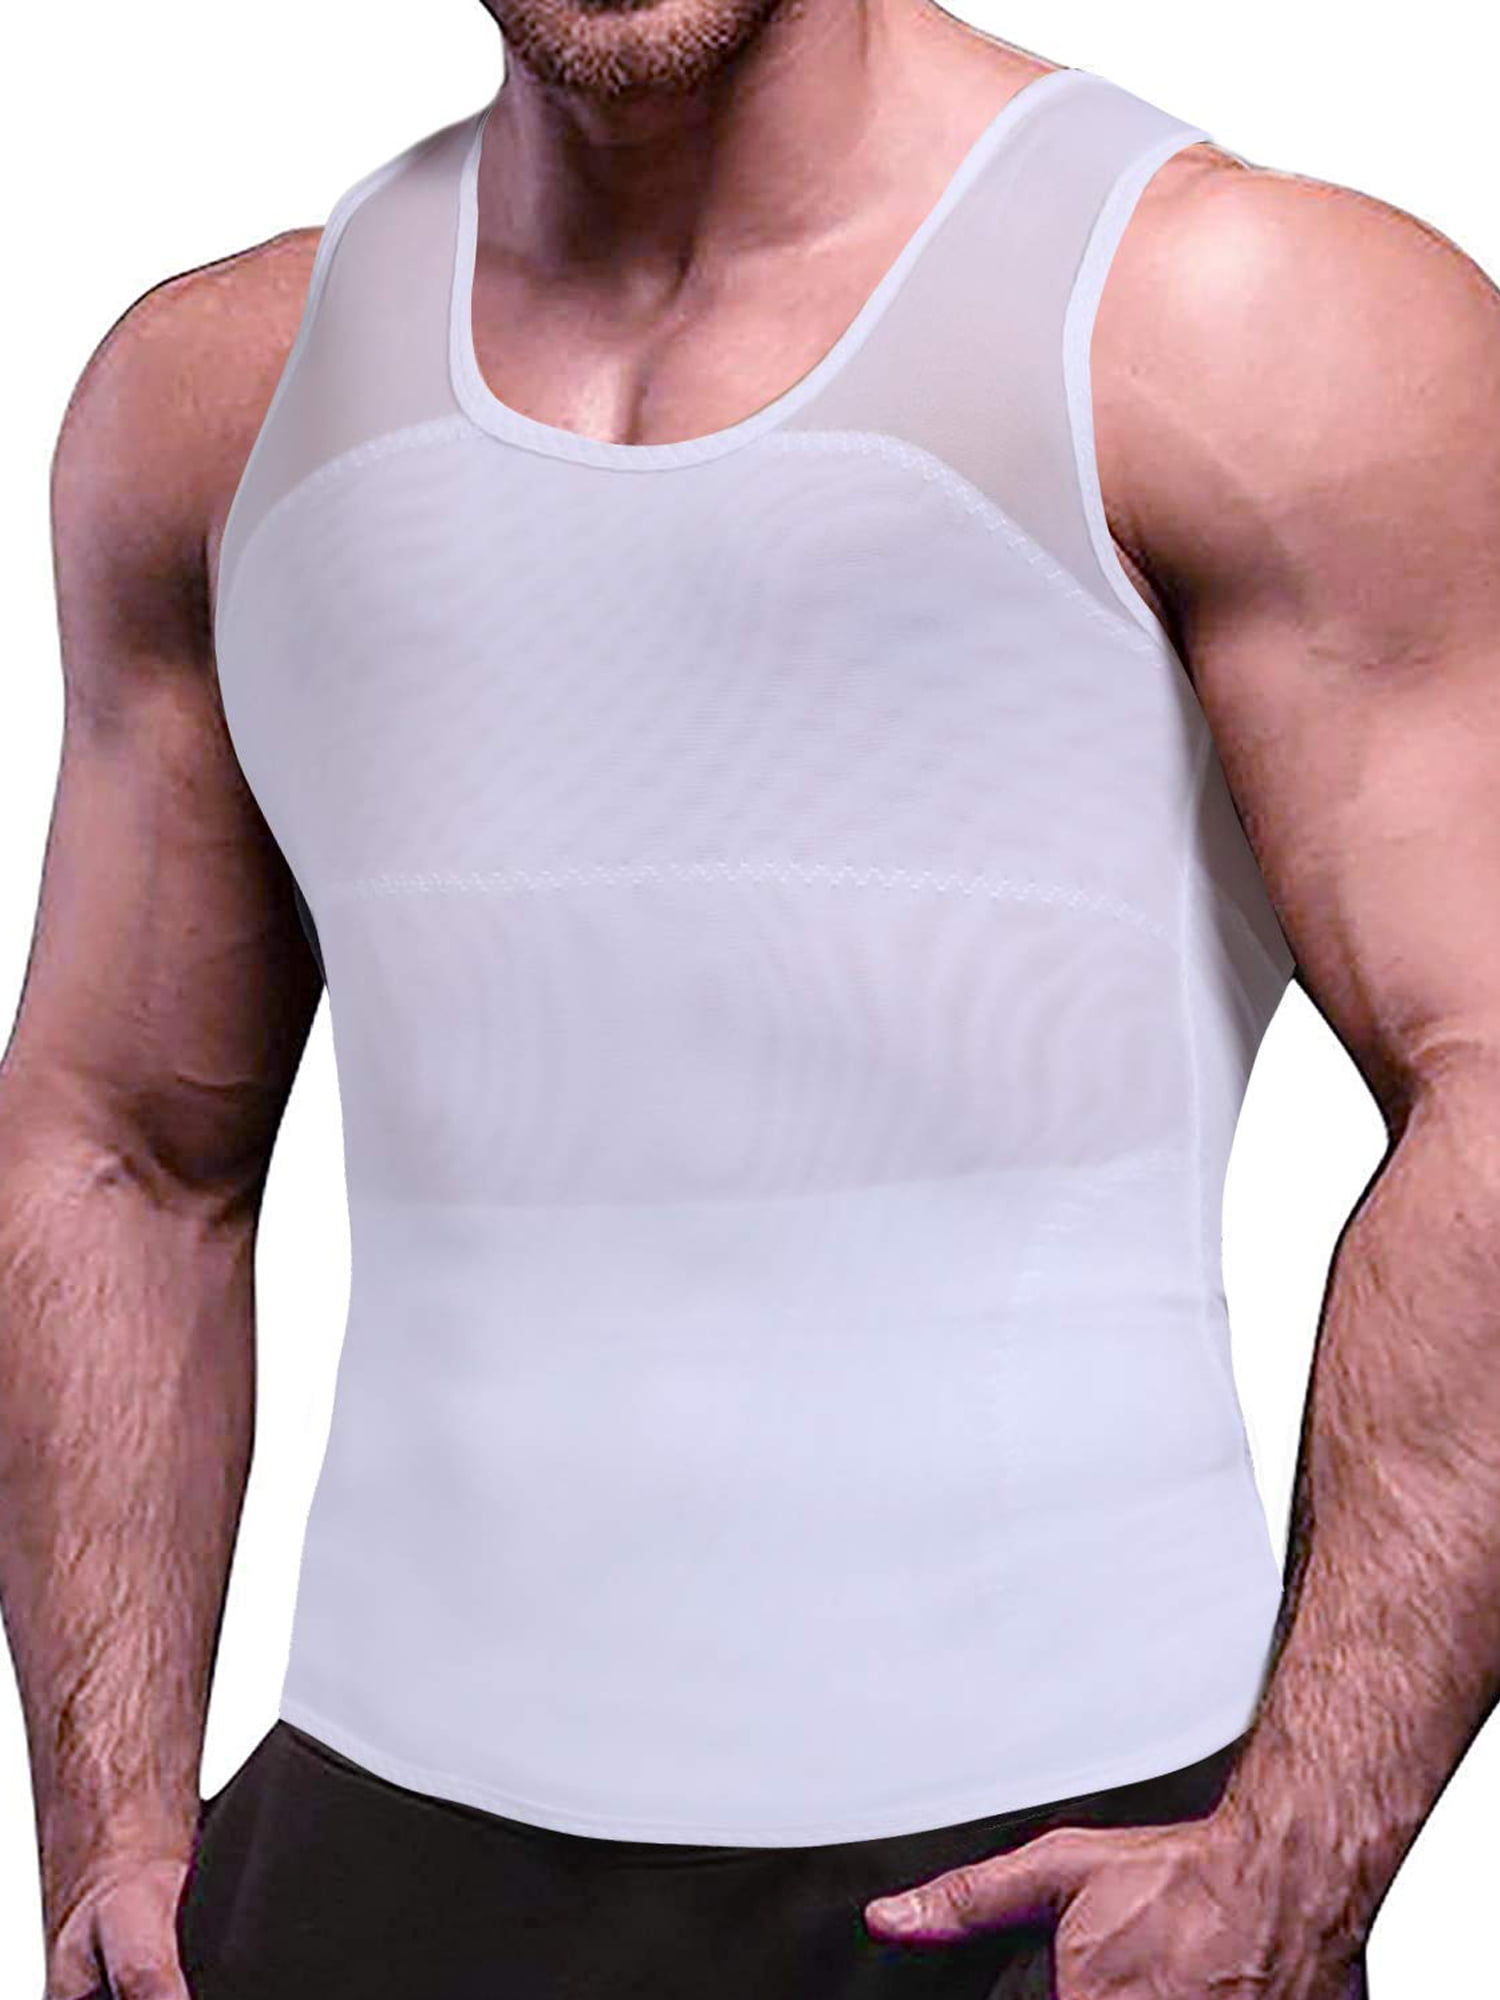 US Men Gynecomastia Compression Shirt Slimmer Shapewear to Hide Man Boobs Moobs 